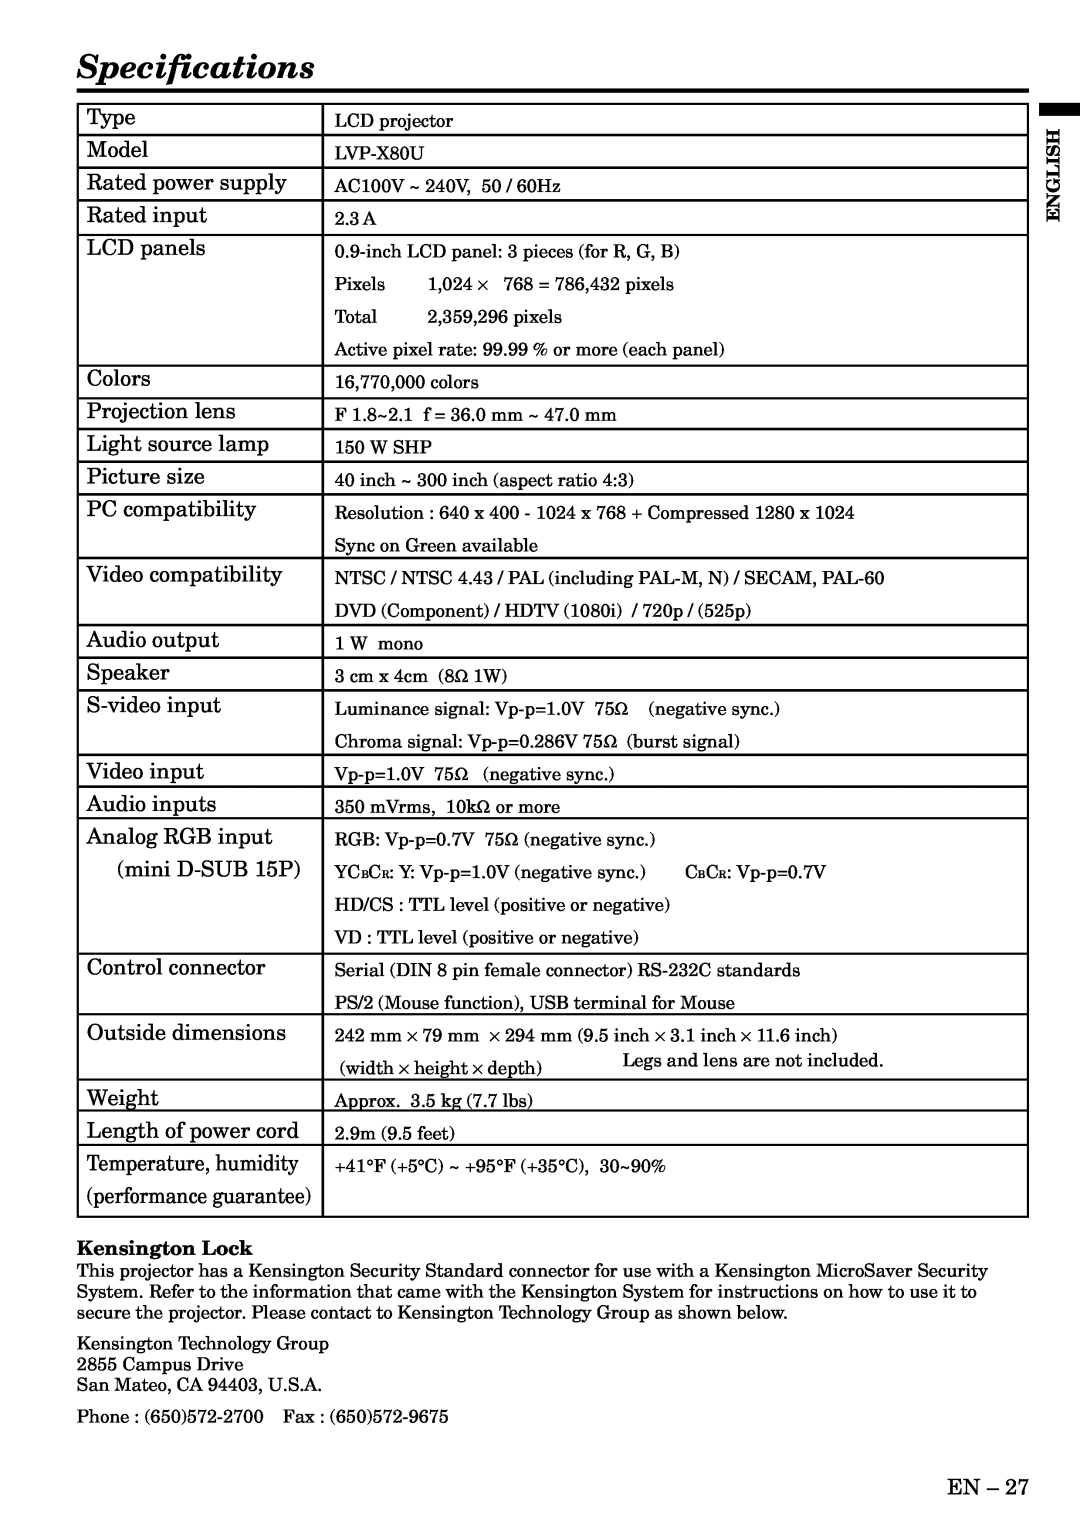 Mitsubishi Electronics X80 user manual Specifications, Kensington Lock 